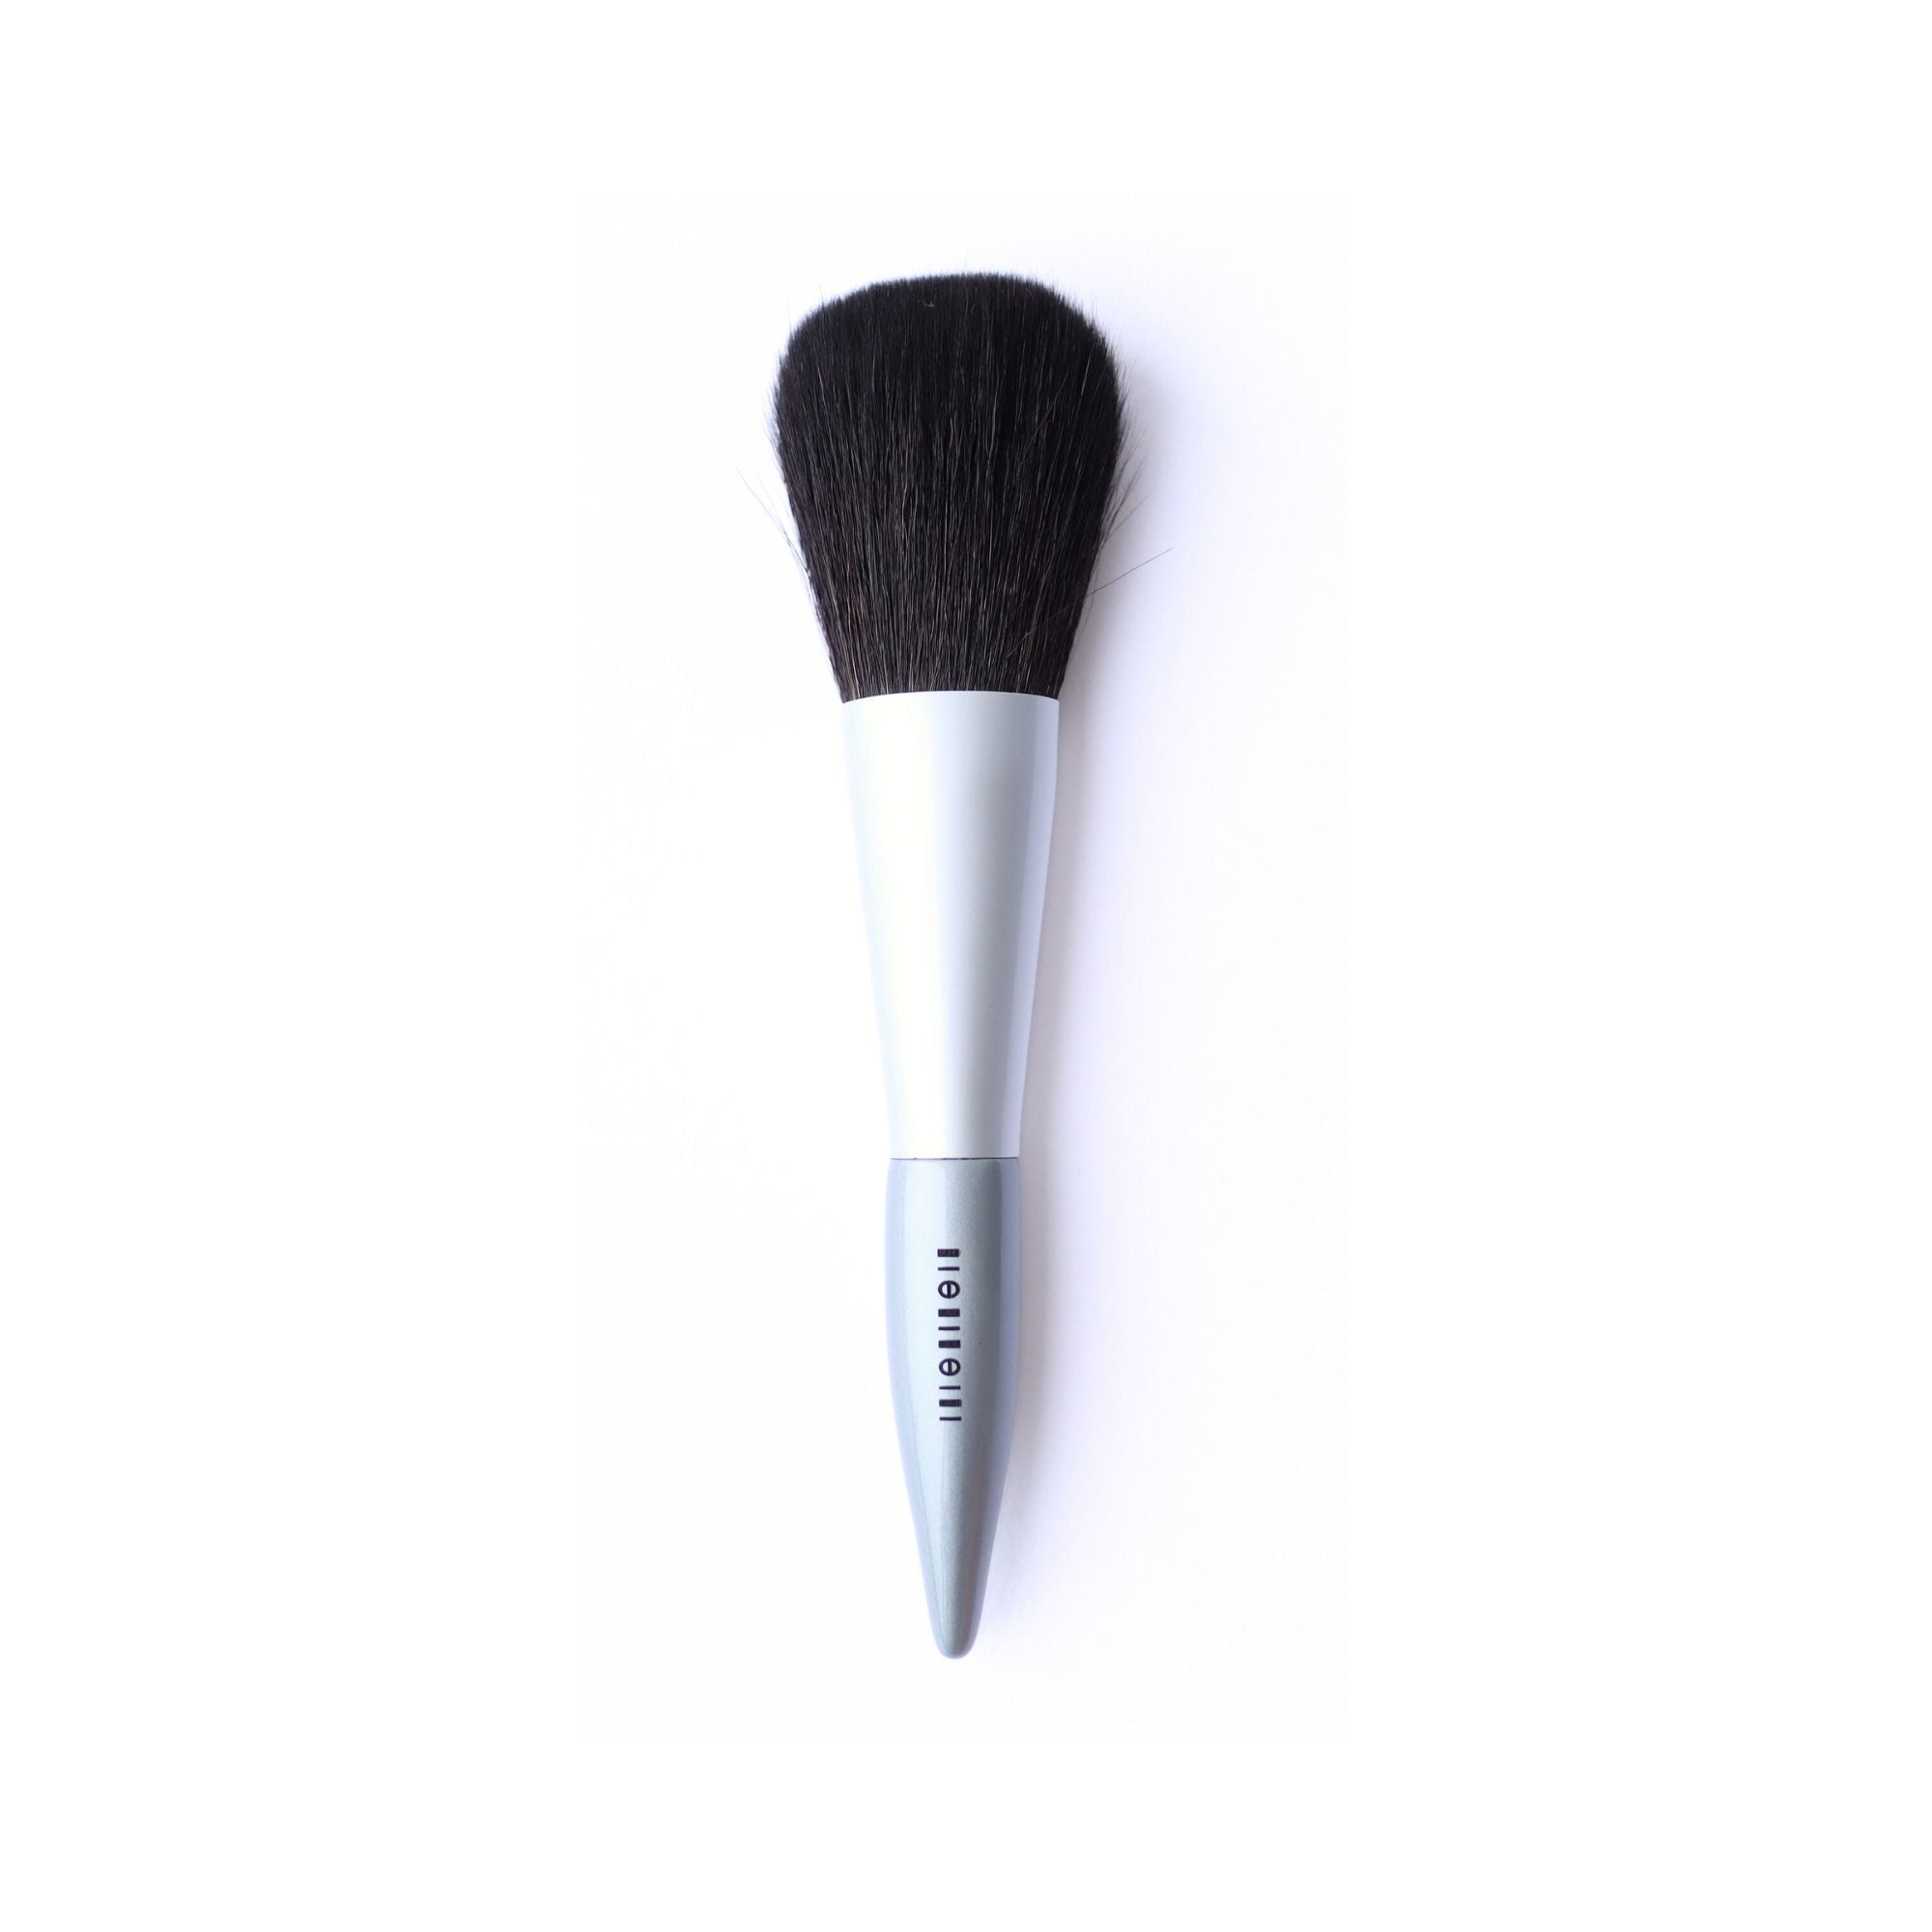 Tauhaus S-Line Face Brush (O-22FC) - Fude Beauty, Japanese Makeup Brushes